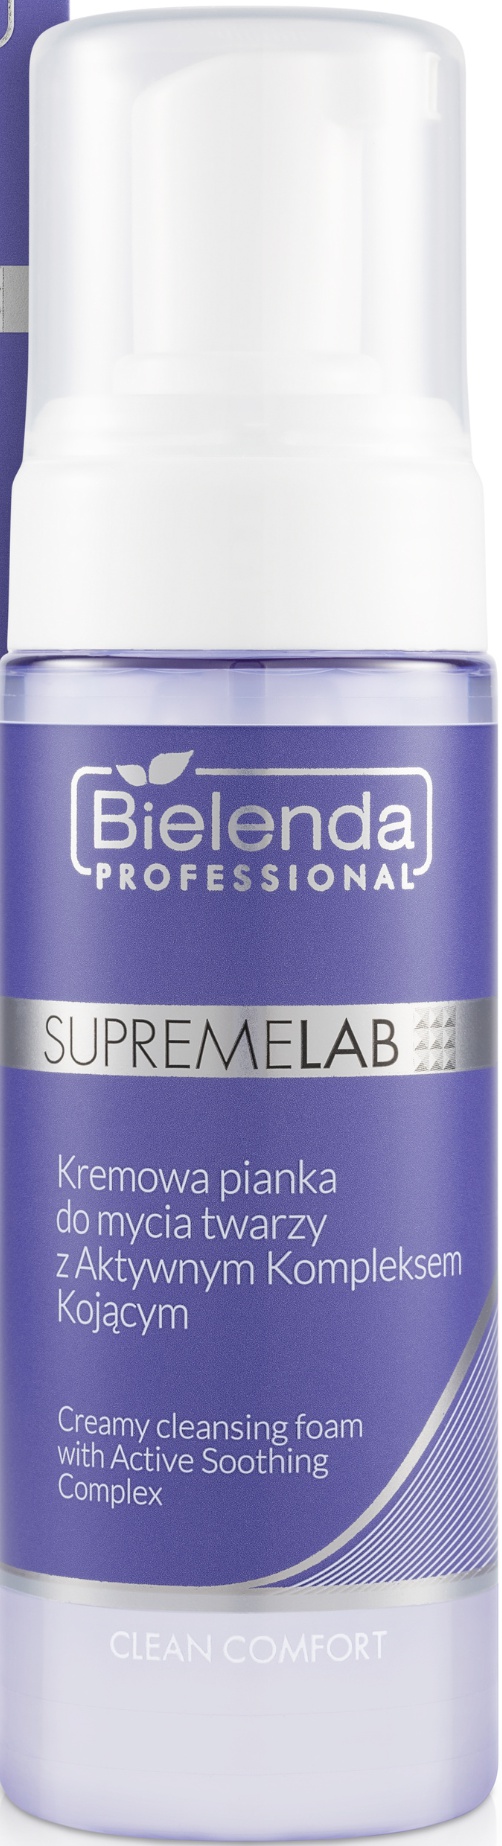 Bielenda Professional Supremelab Clean Comfort Creamy Cleansing Foam